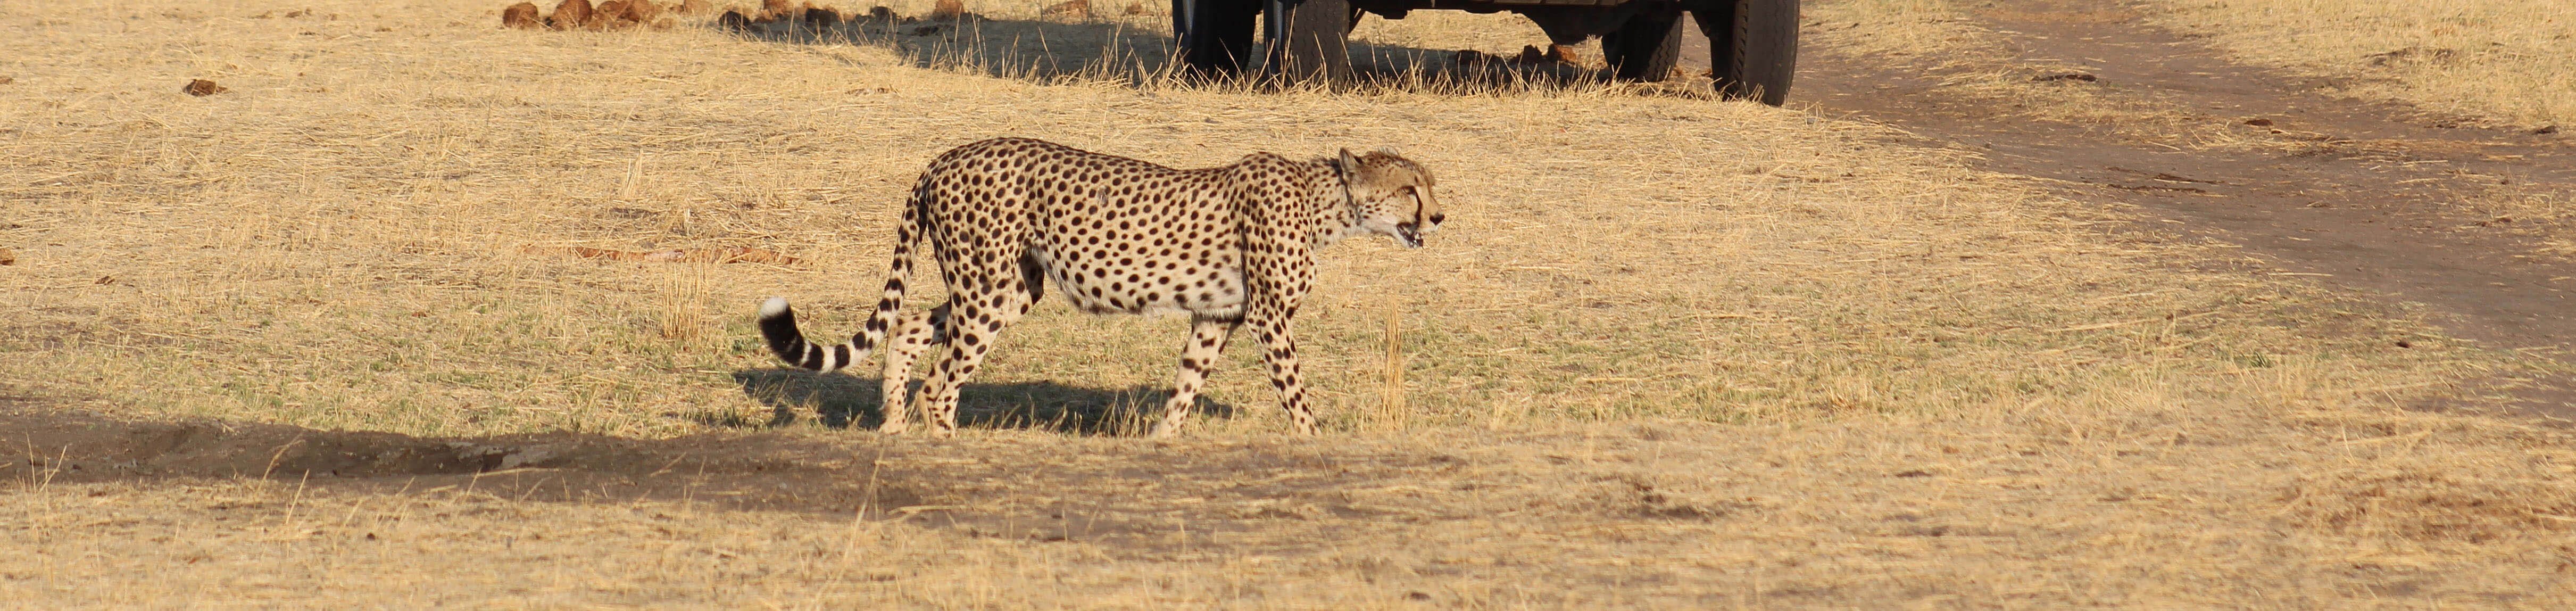 Cheetah at Davison's Camp, Hwange | Experience Africa Safaris